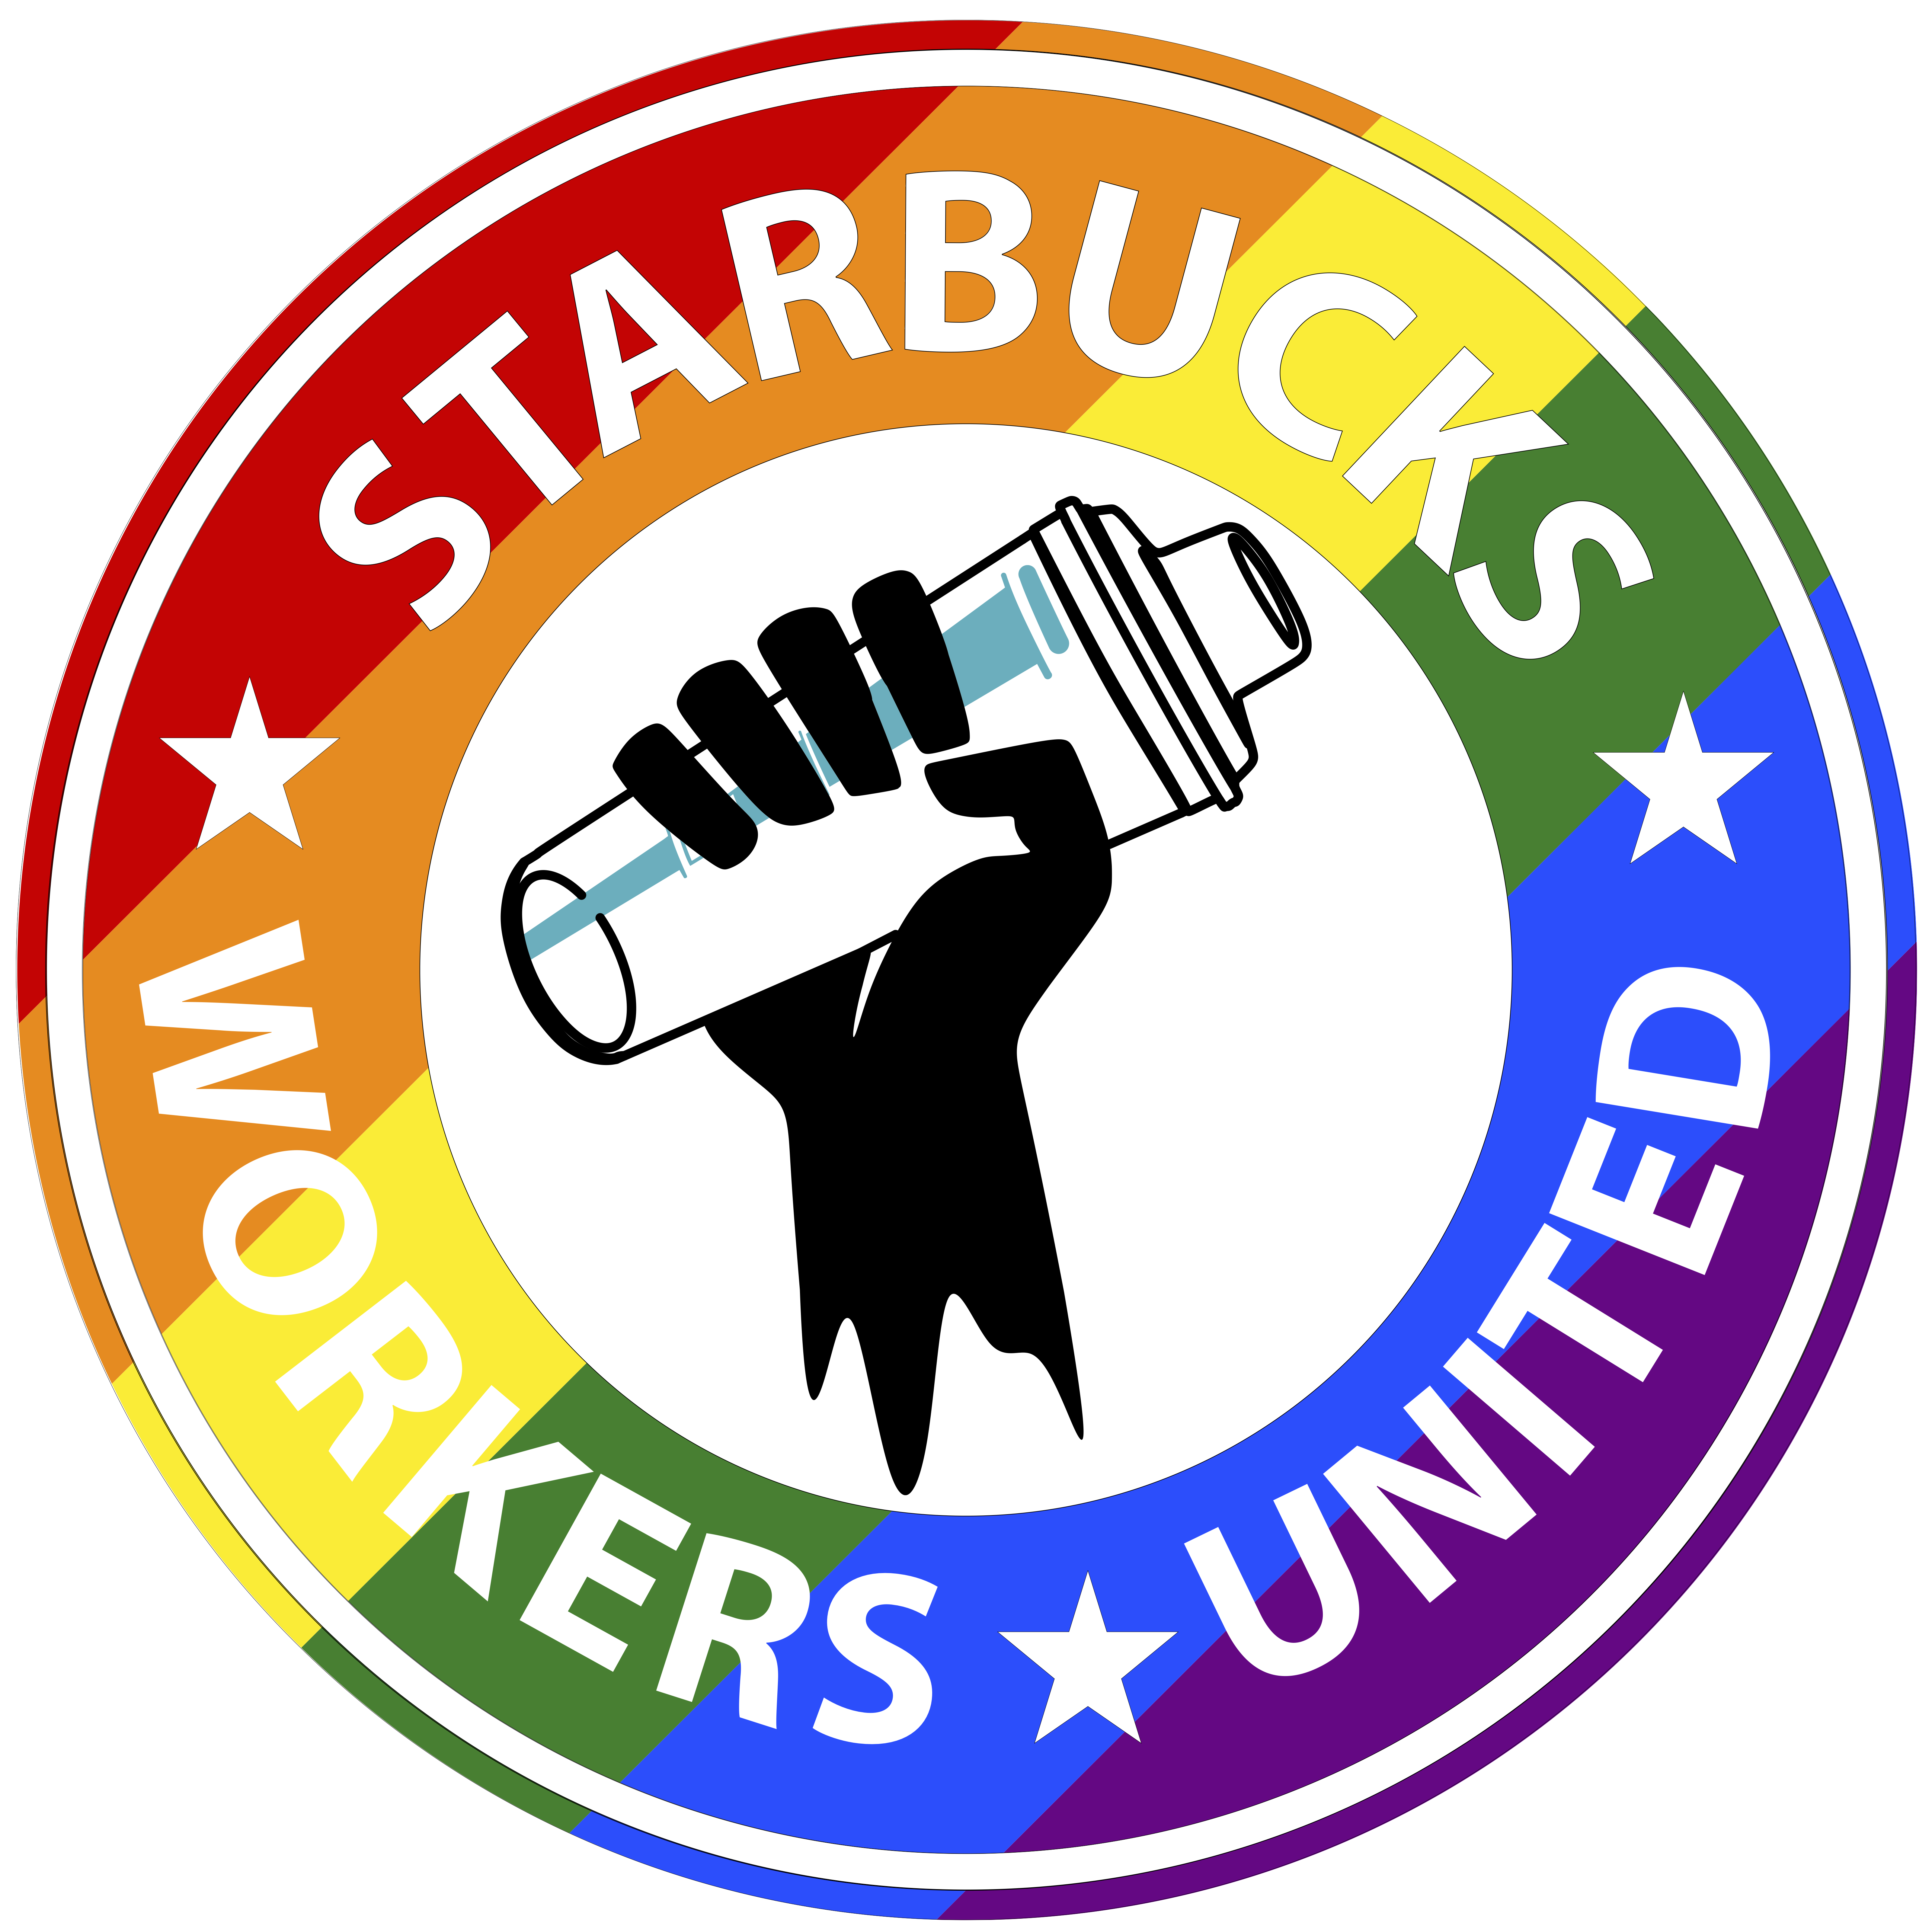 Copy of pride shaker fist logo